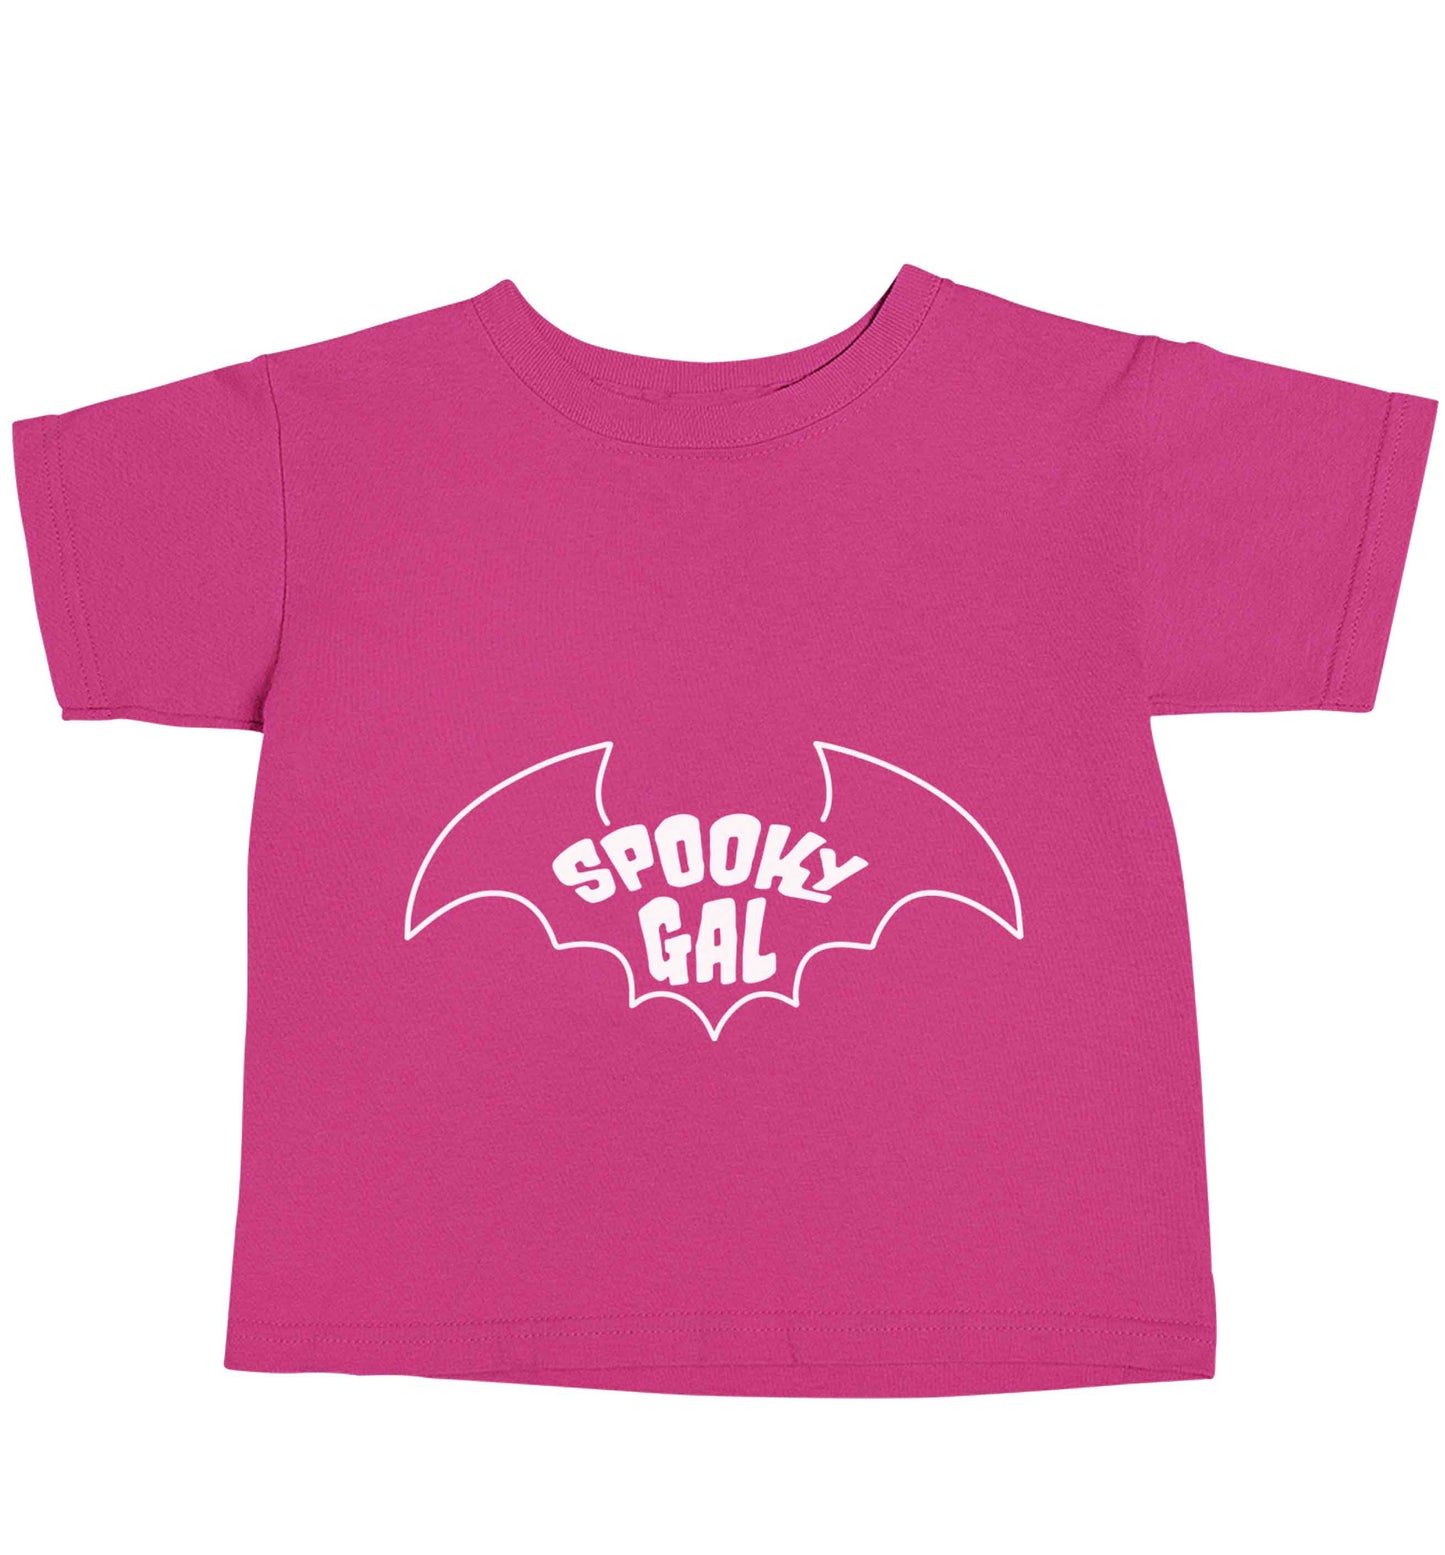 Spooky gal Kit pink baby toddler Tshirt 2 Years